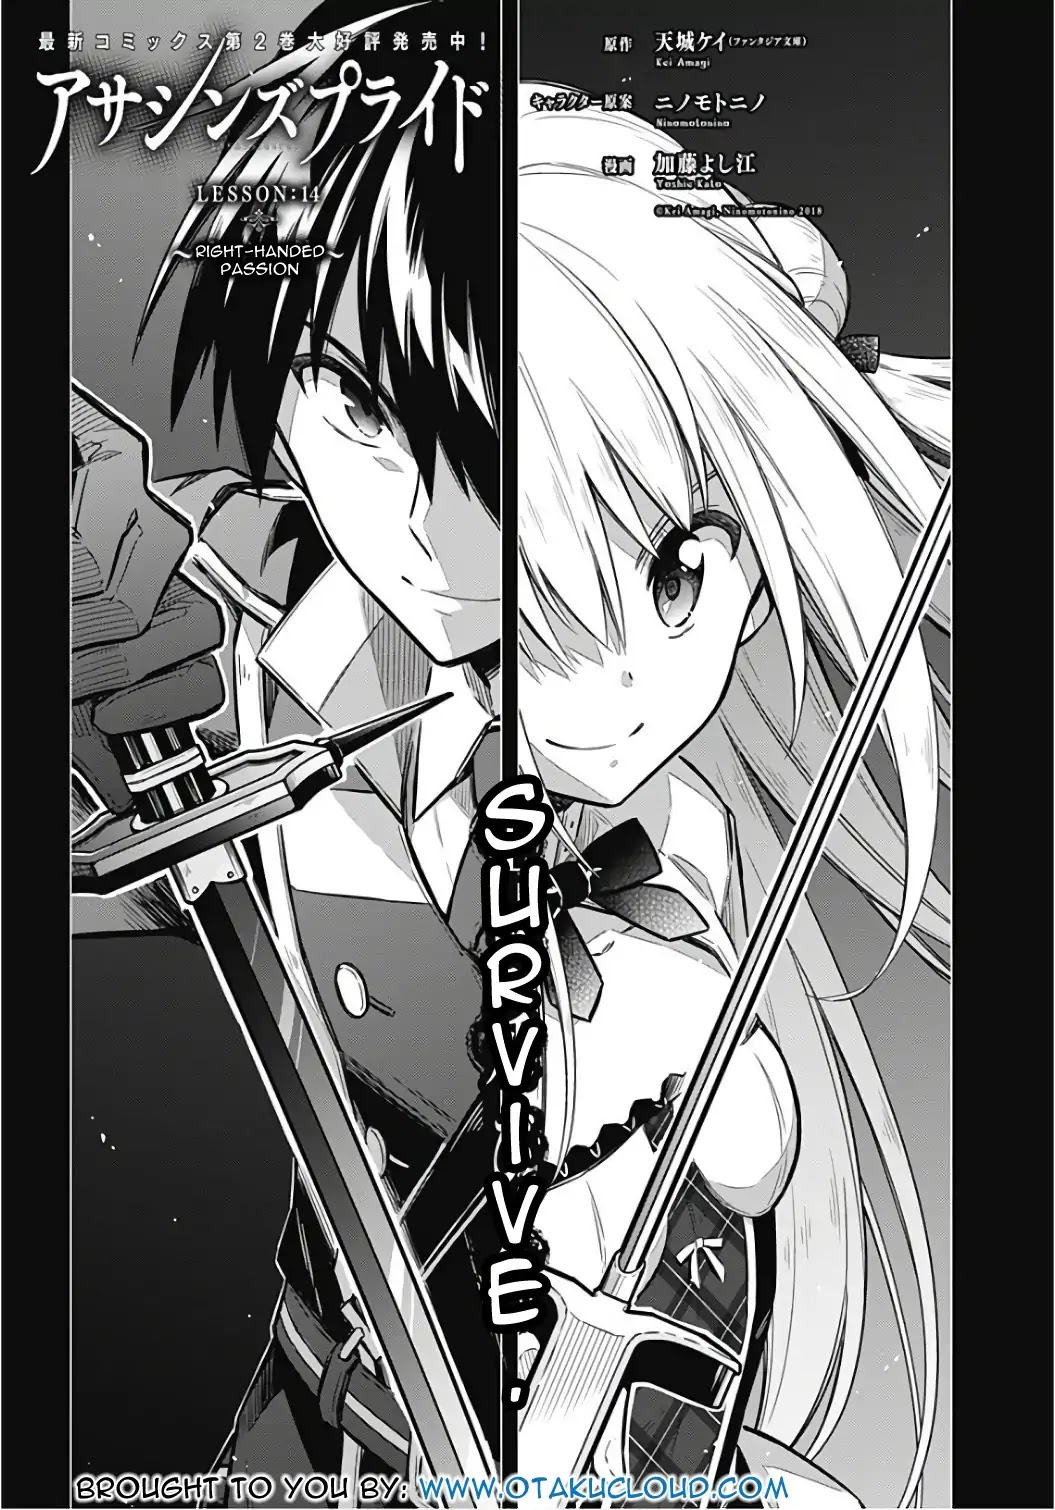 Manga Chapter 14 Assassins Pride Wiki Fandom